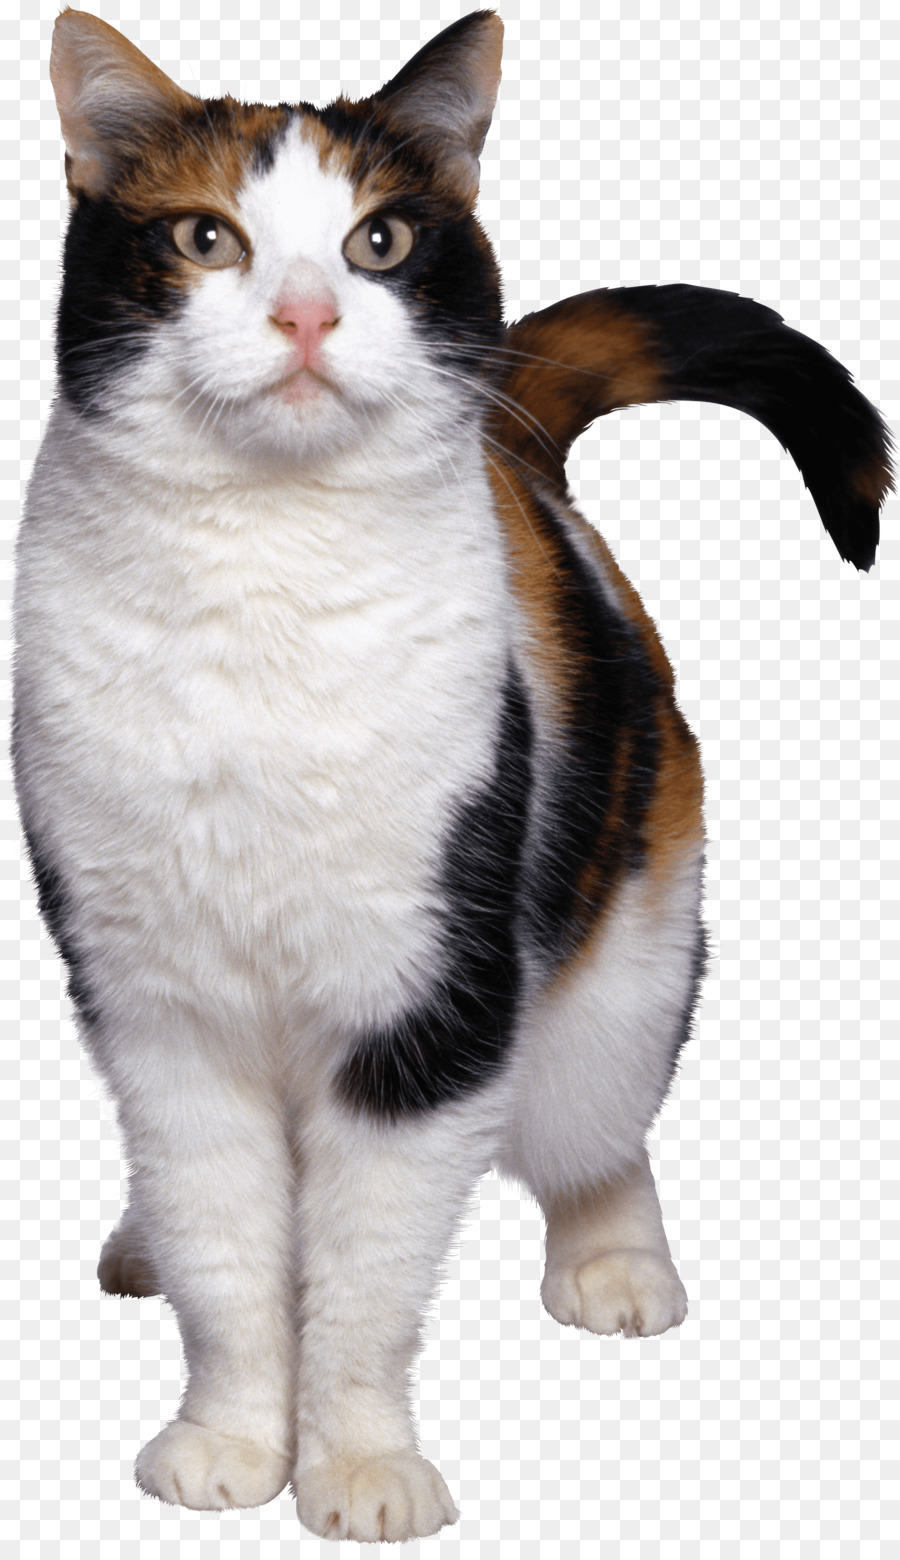 Egyptian Mau American Wirehair Aegean cat European shorthair Kitten - cats png download - 1747*3000 - Free Transparent Egyptian Mau png Download.